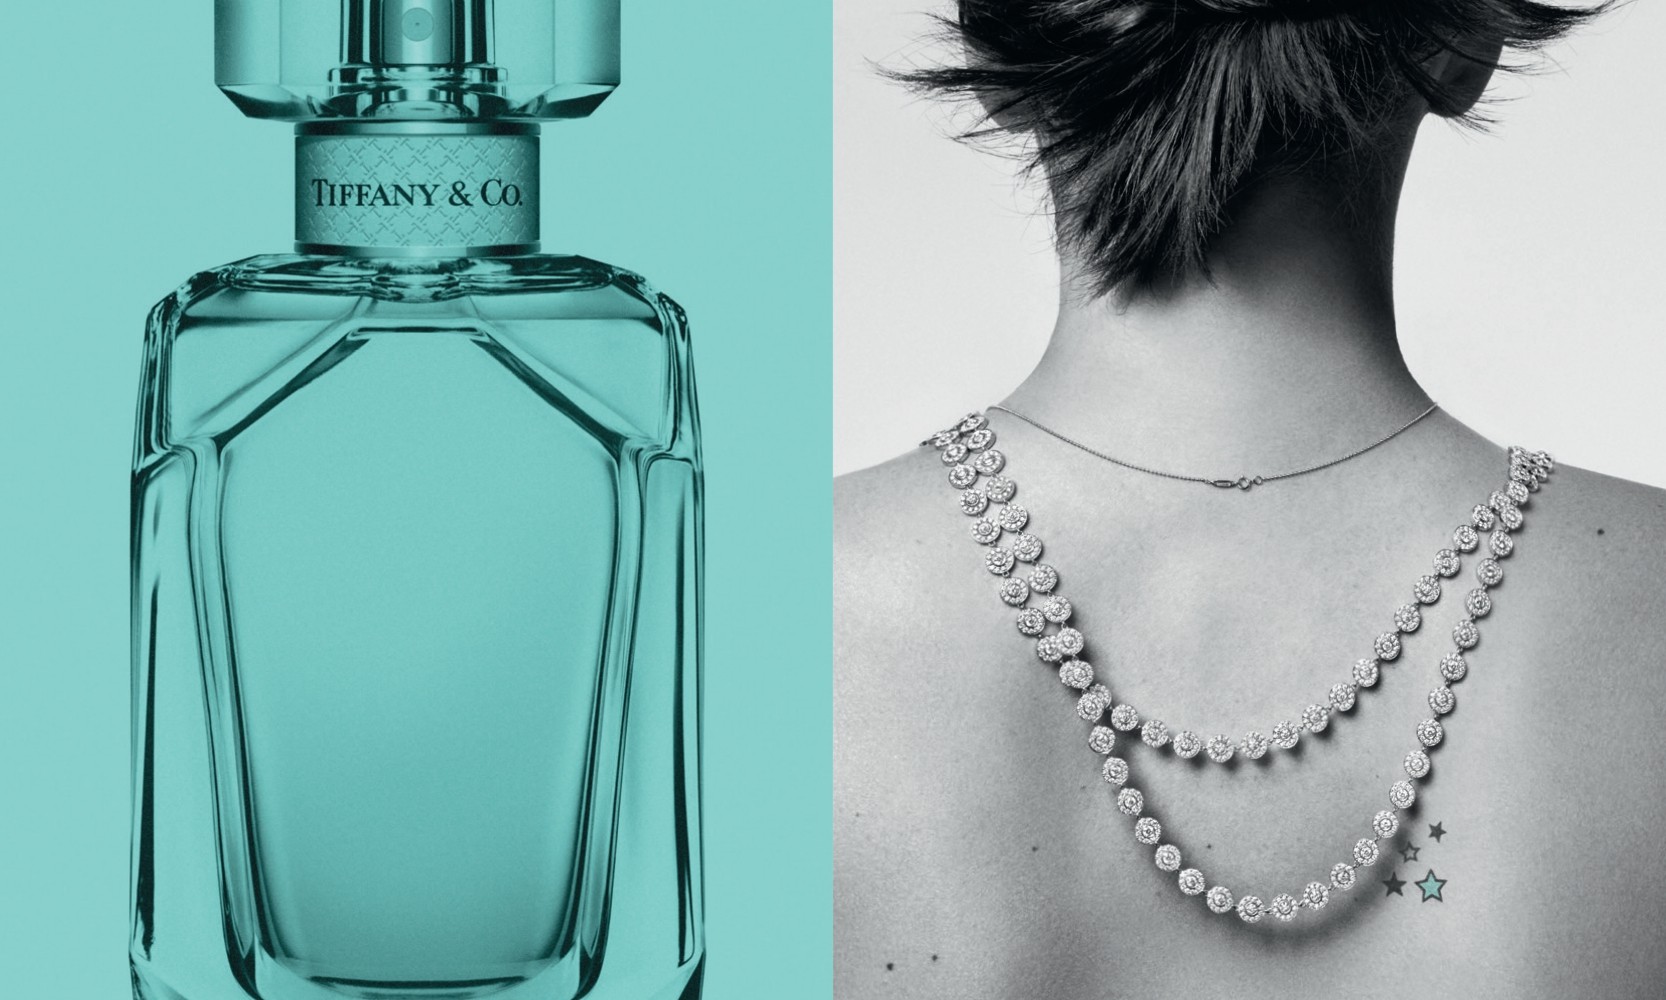 Вышел новый аромат Tiffany & Co.